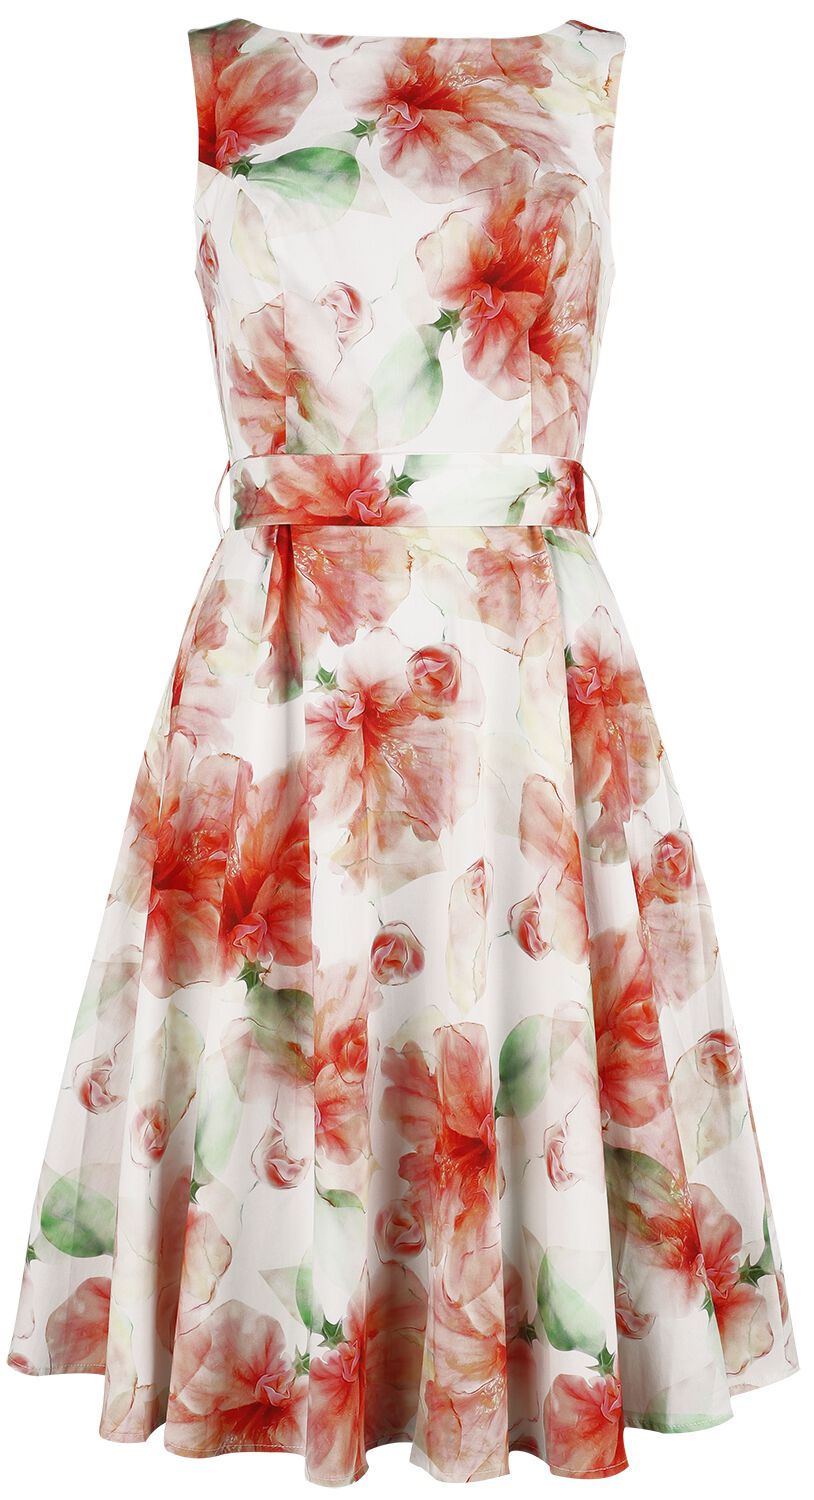 H&R London - Rockabilly Kleid knielang - Ayla Floral Swing Dress - XS bis 4XL - für Damen - Größe L - multicolor